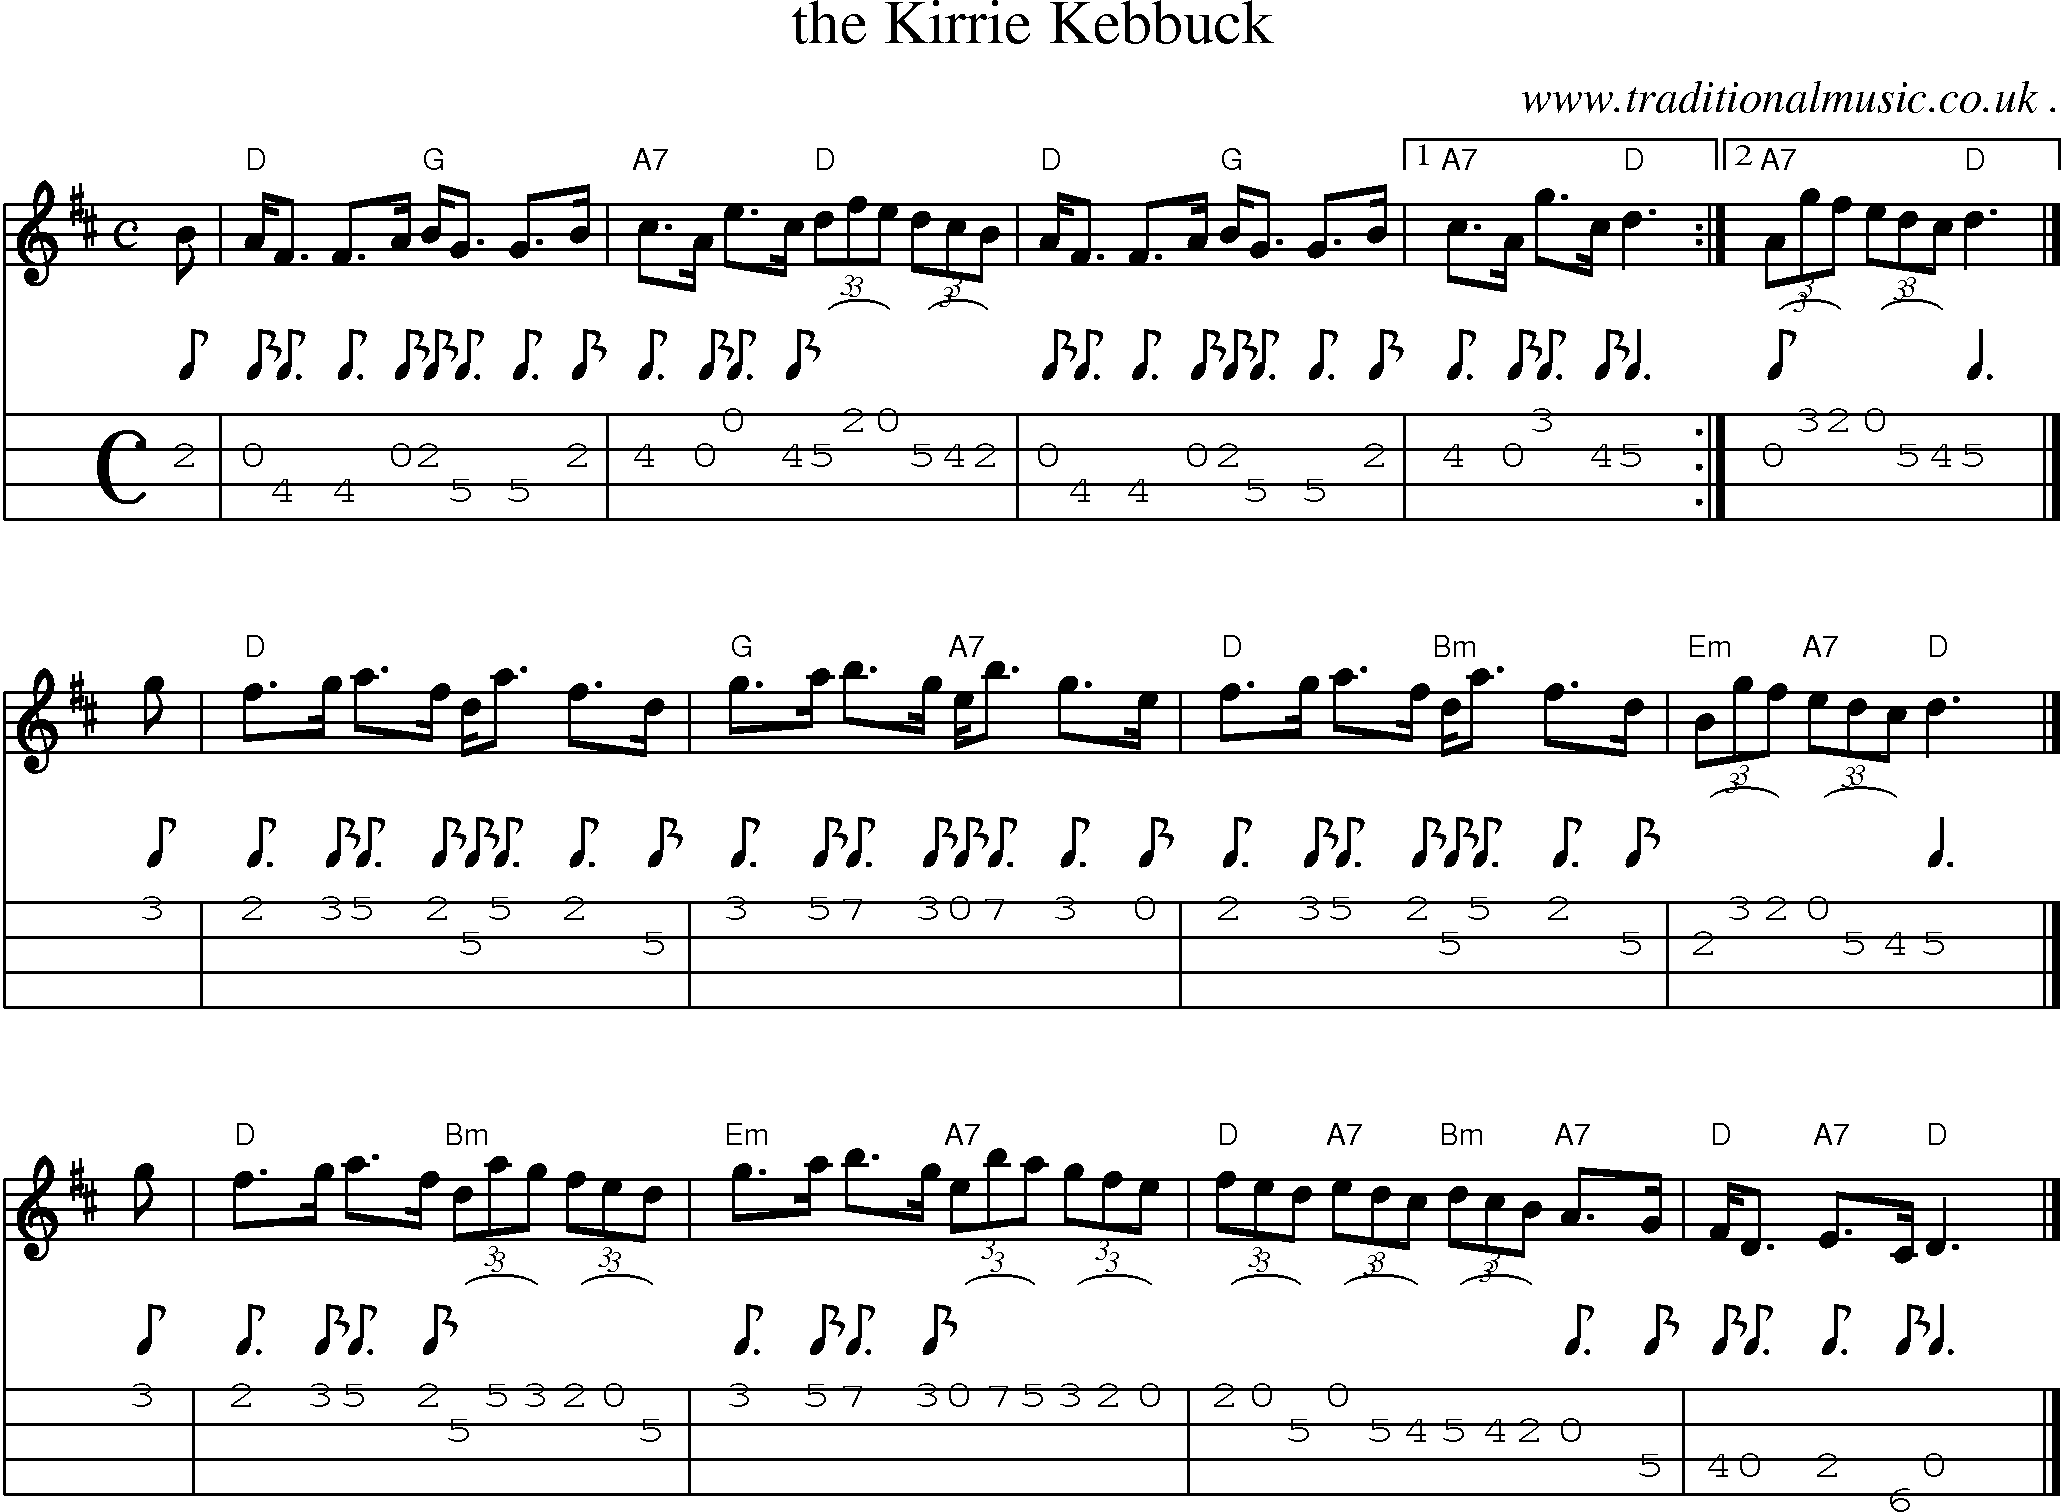 Sheet-music  score, Chords and Mandolin Tabs for The Kirrie Kebbuck